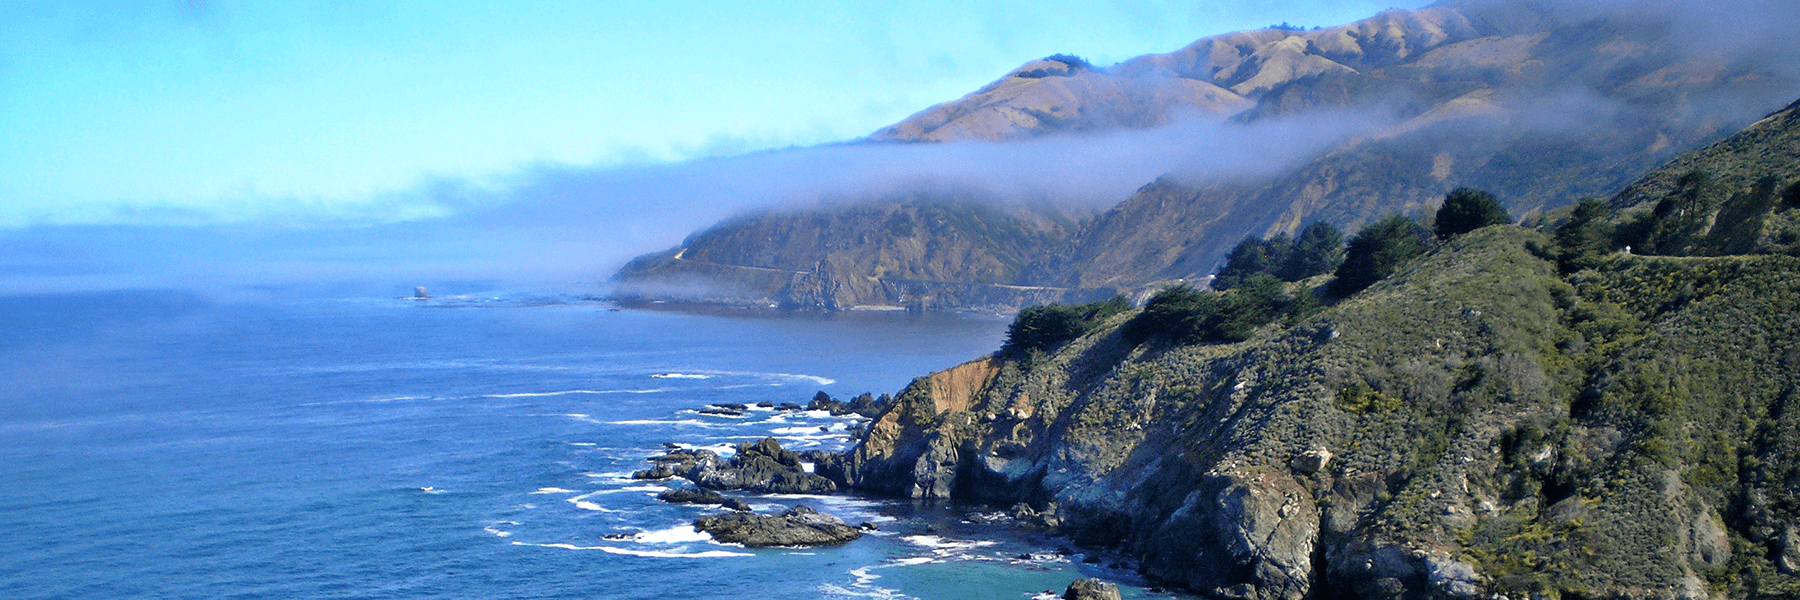 California Coast, Credit: Ron Clausen (CC BY-SA 4.0)